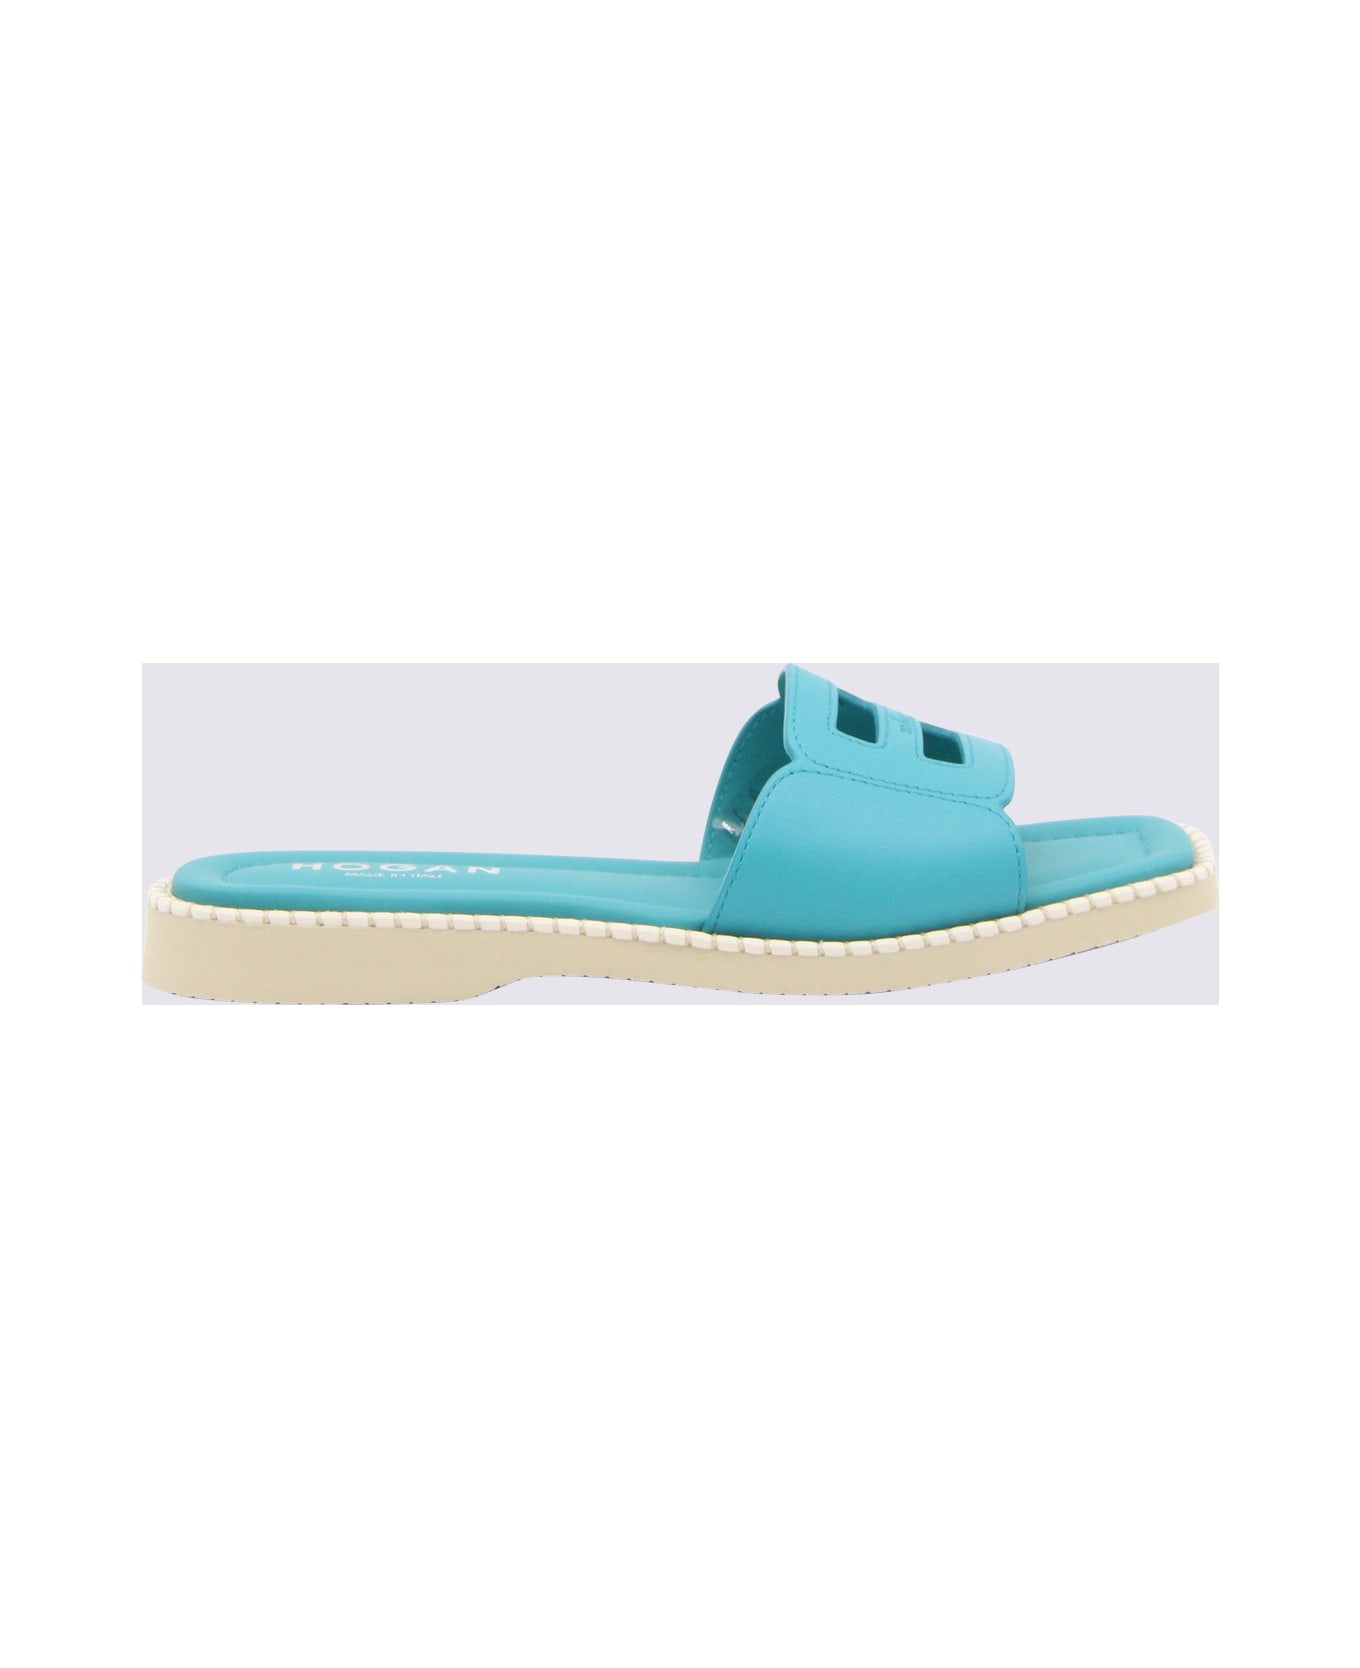 Hogan Turquoise Leather H638 Flat Sandals - Turquoise サンダル